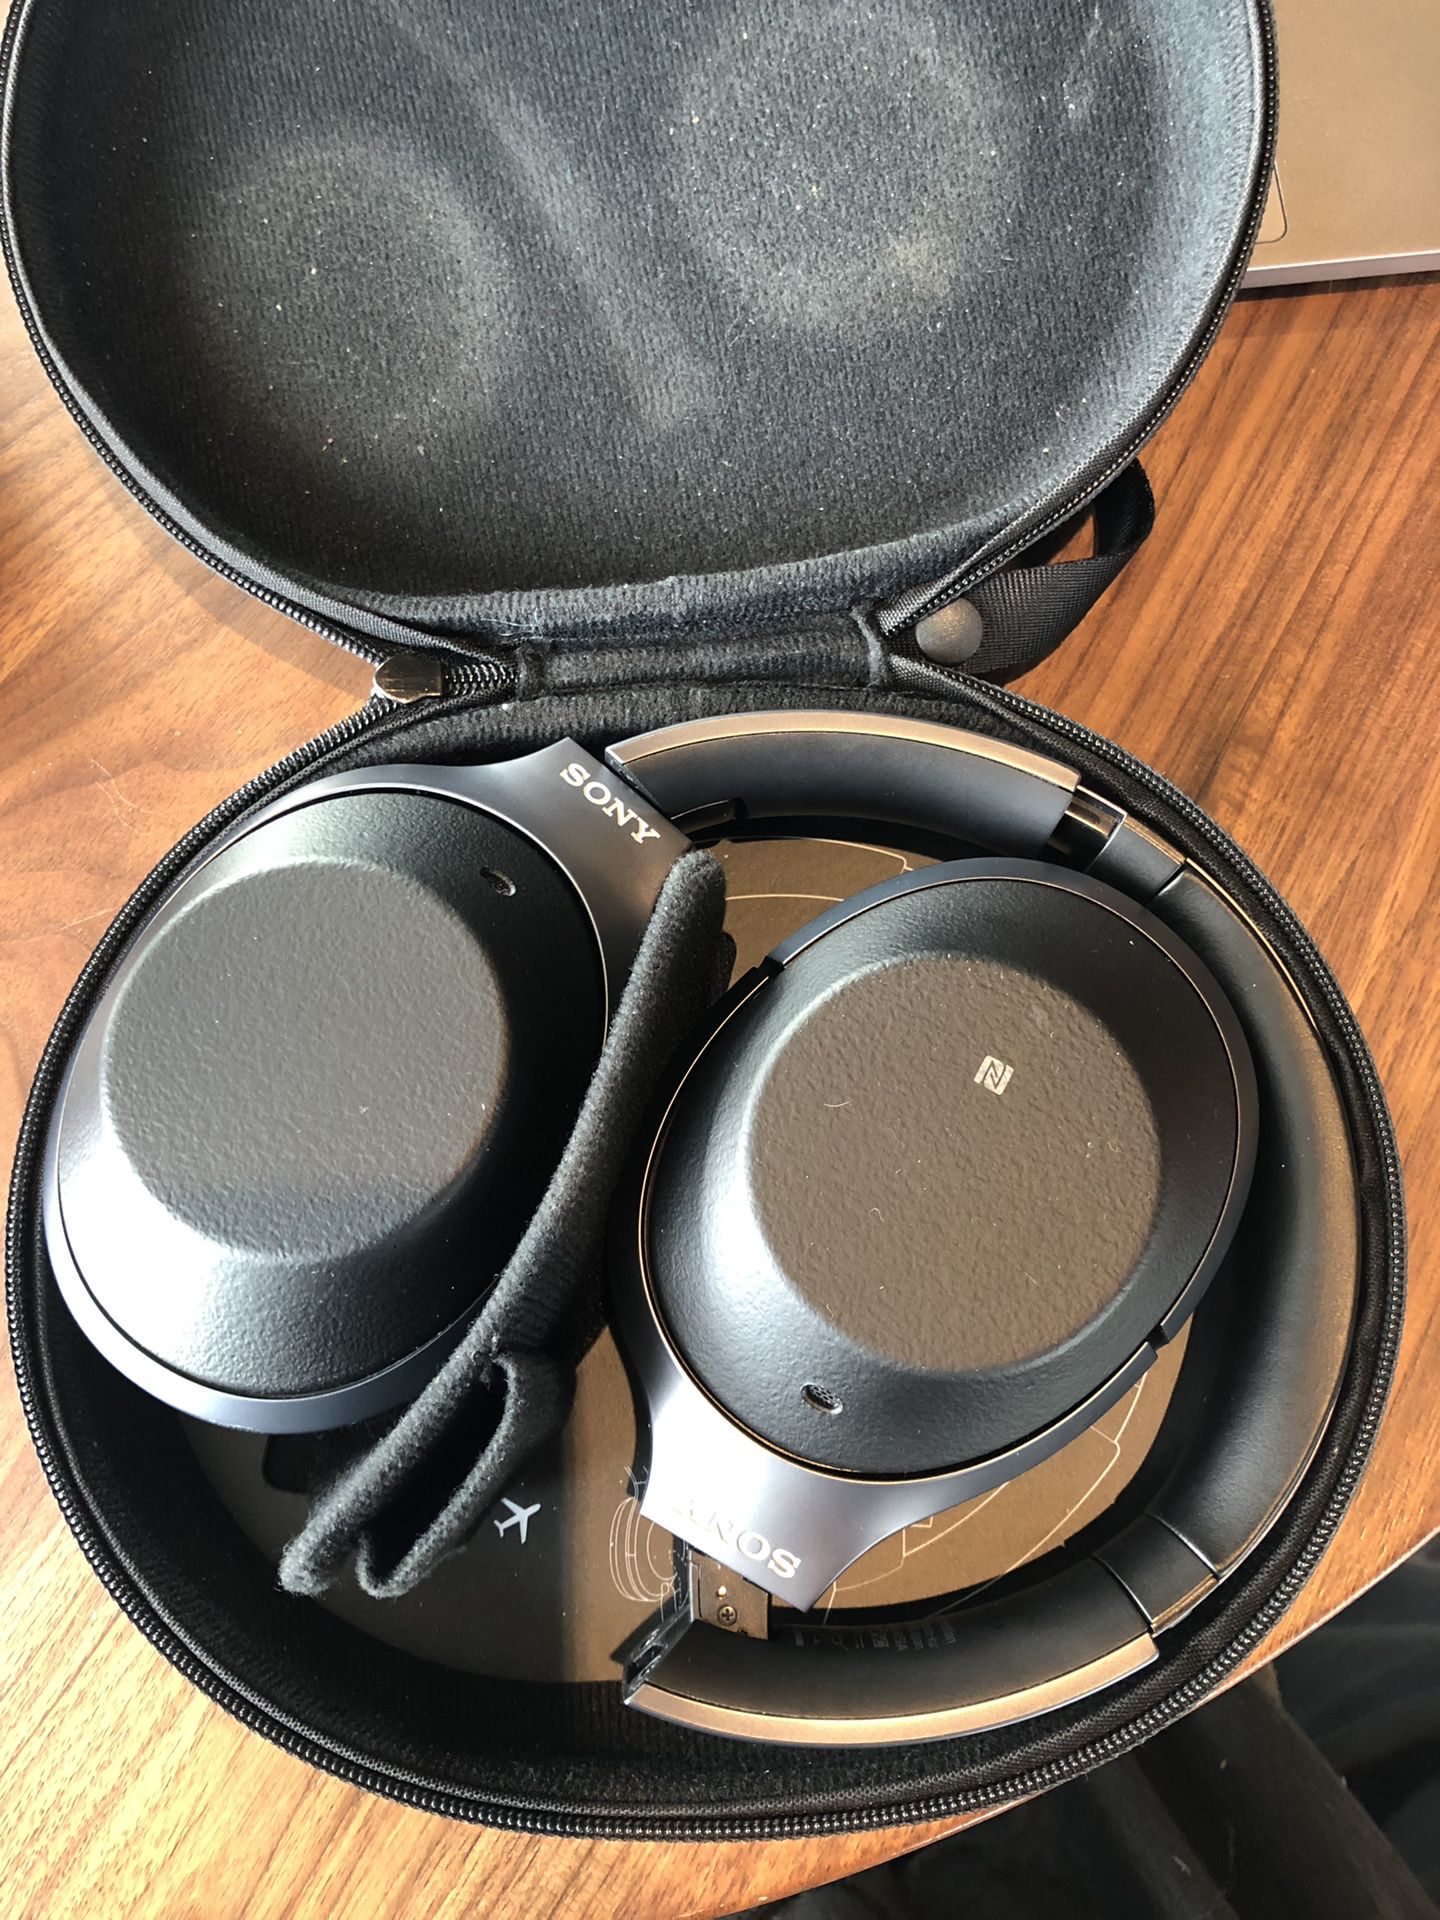 Sony WH-1000XM2 noise cancelling headphones